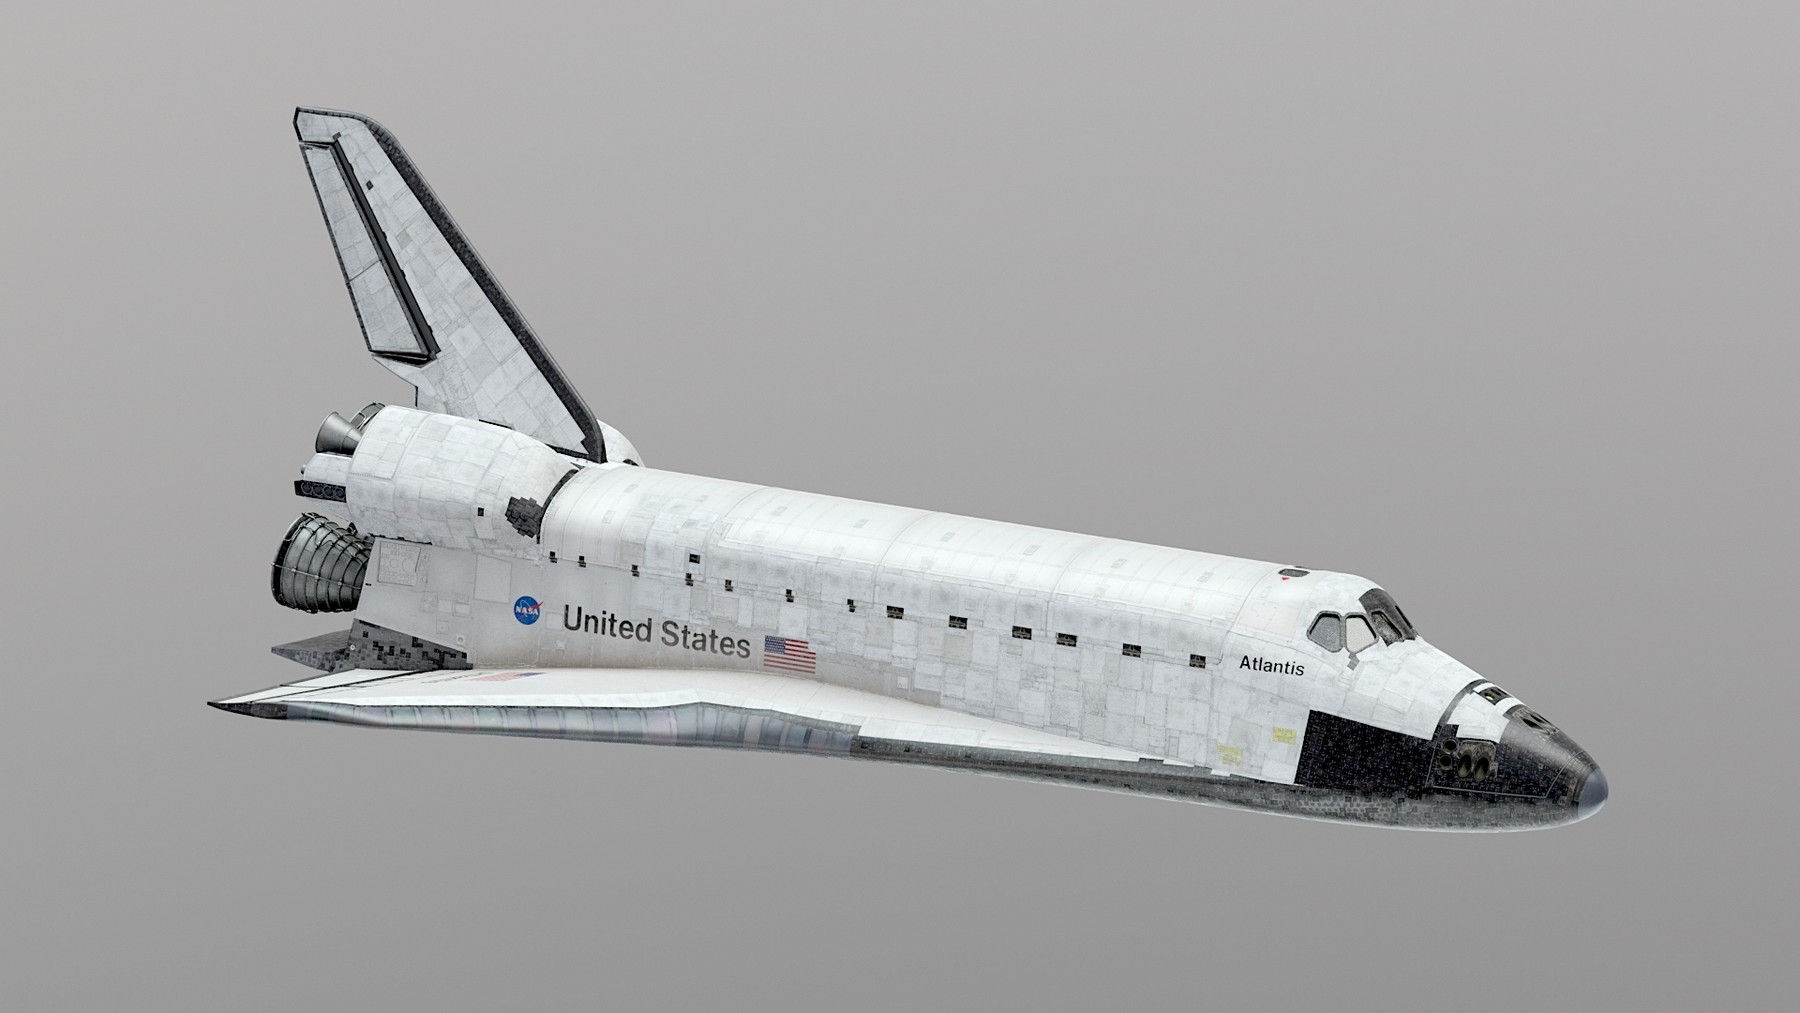 nasa space shuttle model